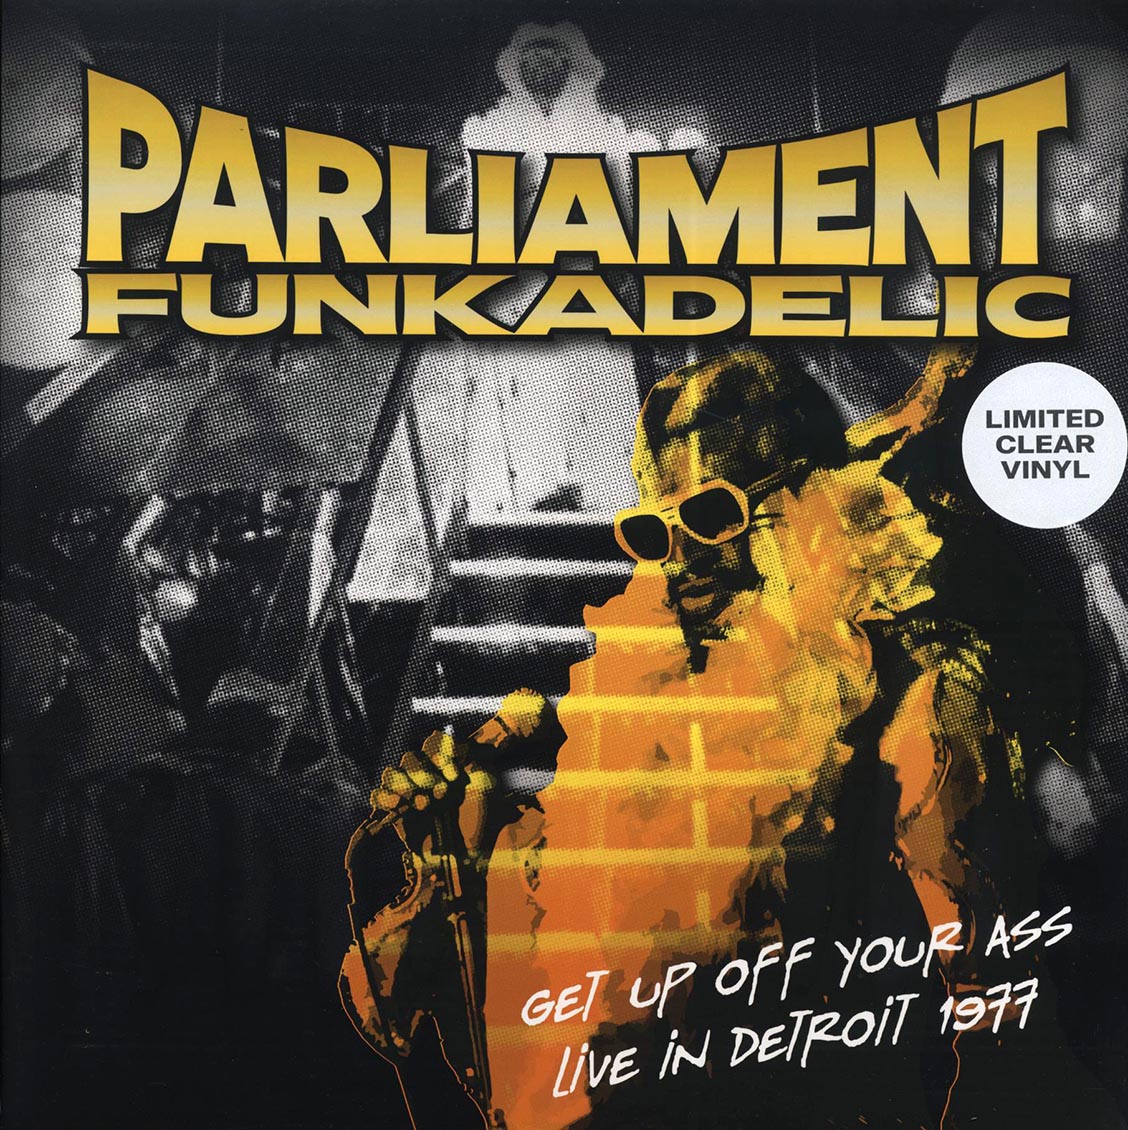 Funkadelic (Parliament) - Get Up Off Your Ass: Live In Detroit 1977 (ltd. ed.) (colored vinyl) - Vinyl LP